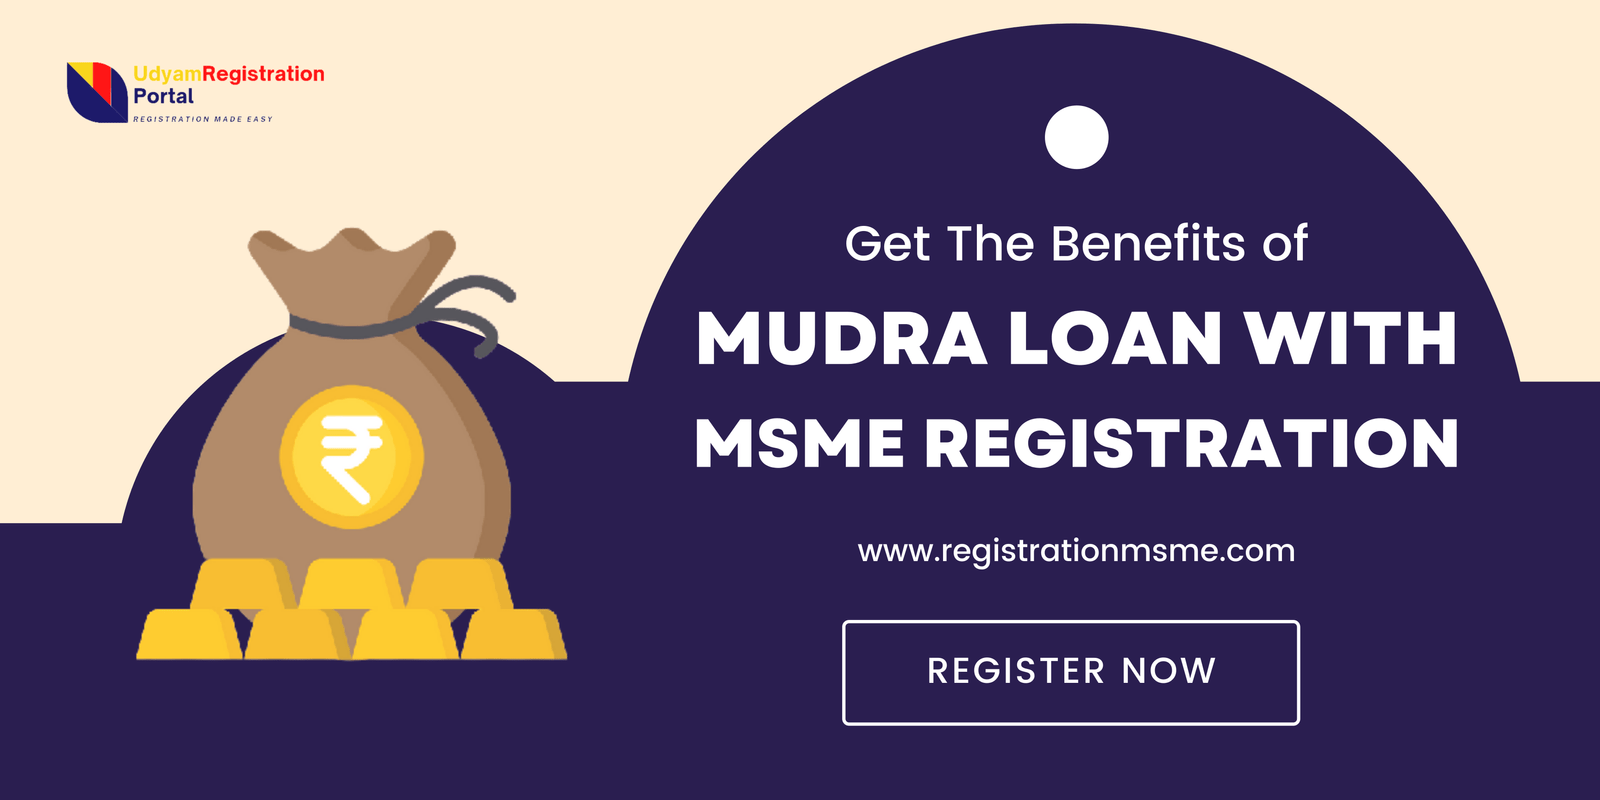 Get mudra loan Benefits with MSME registration